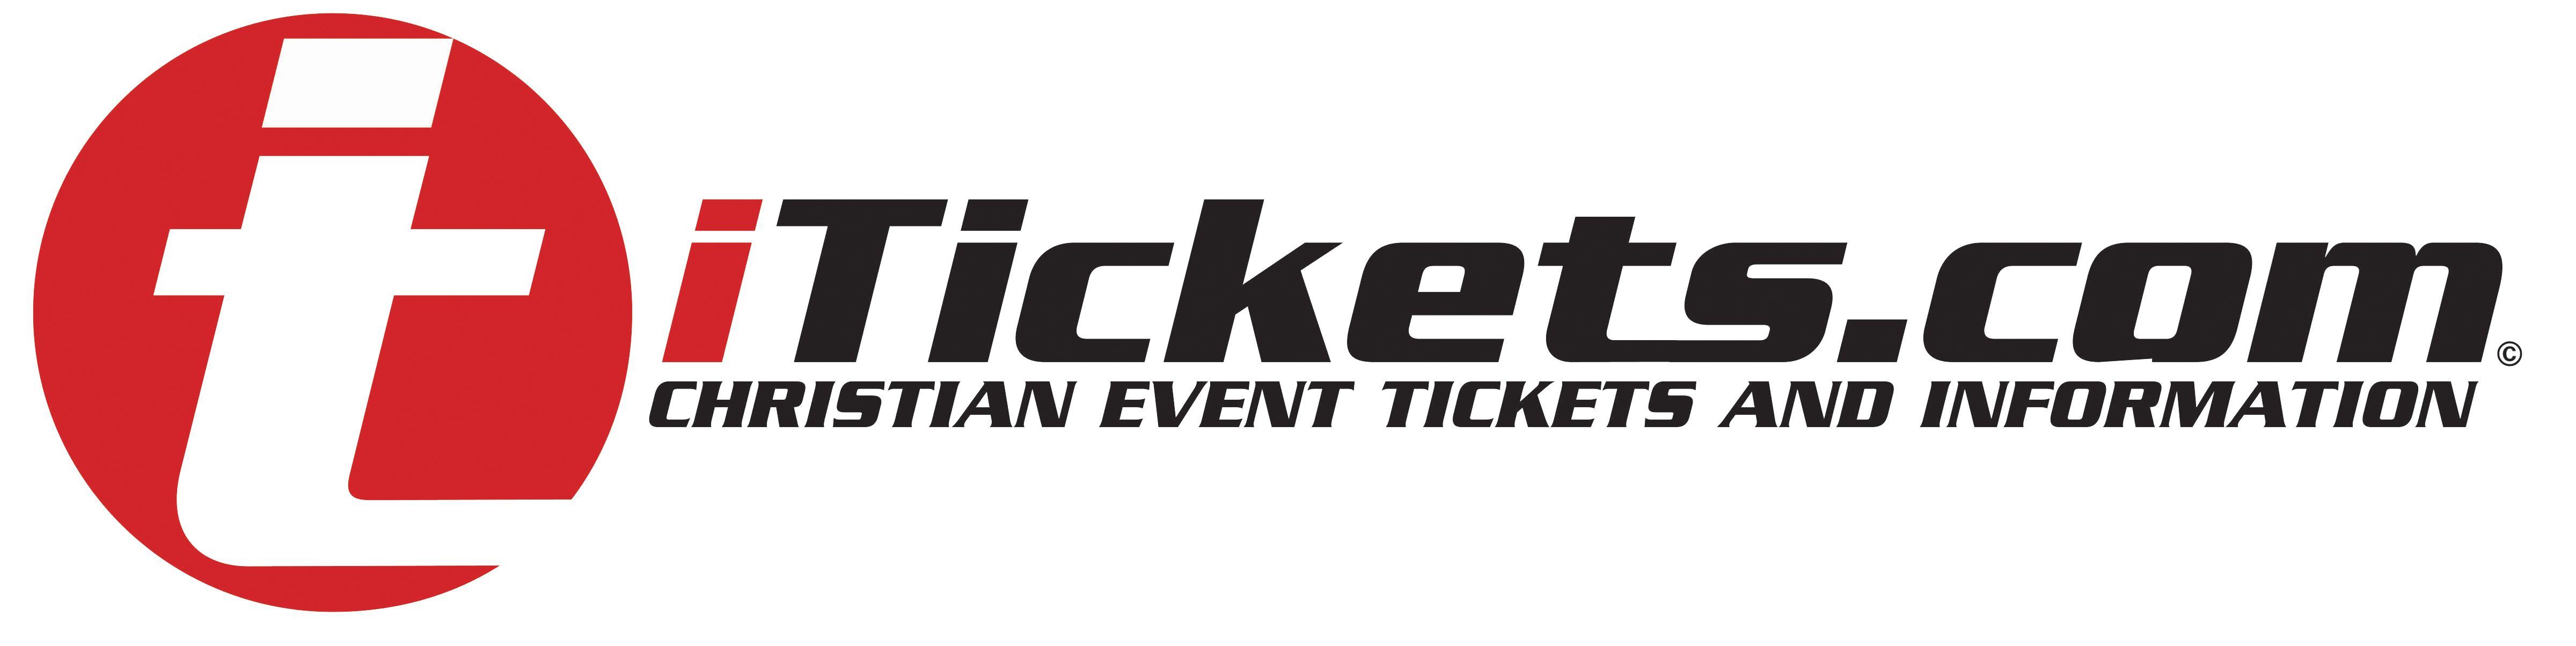 Itickets.com Logo - LogoDix